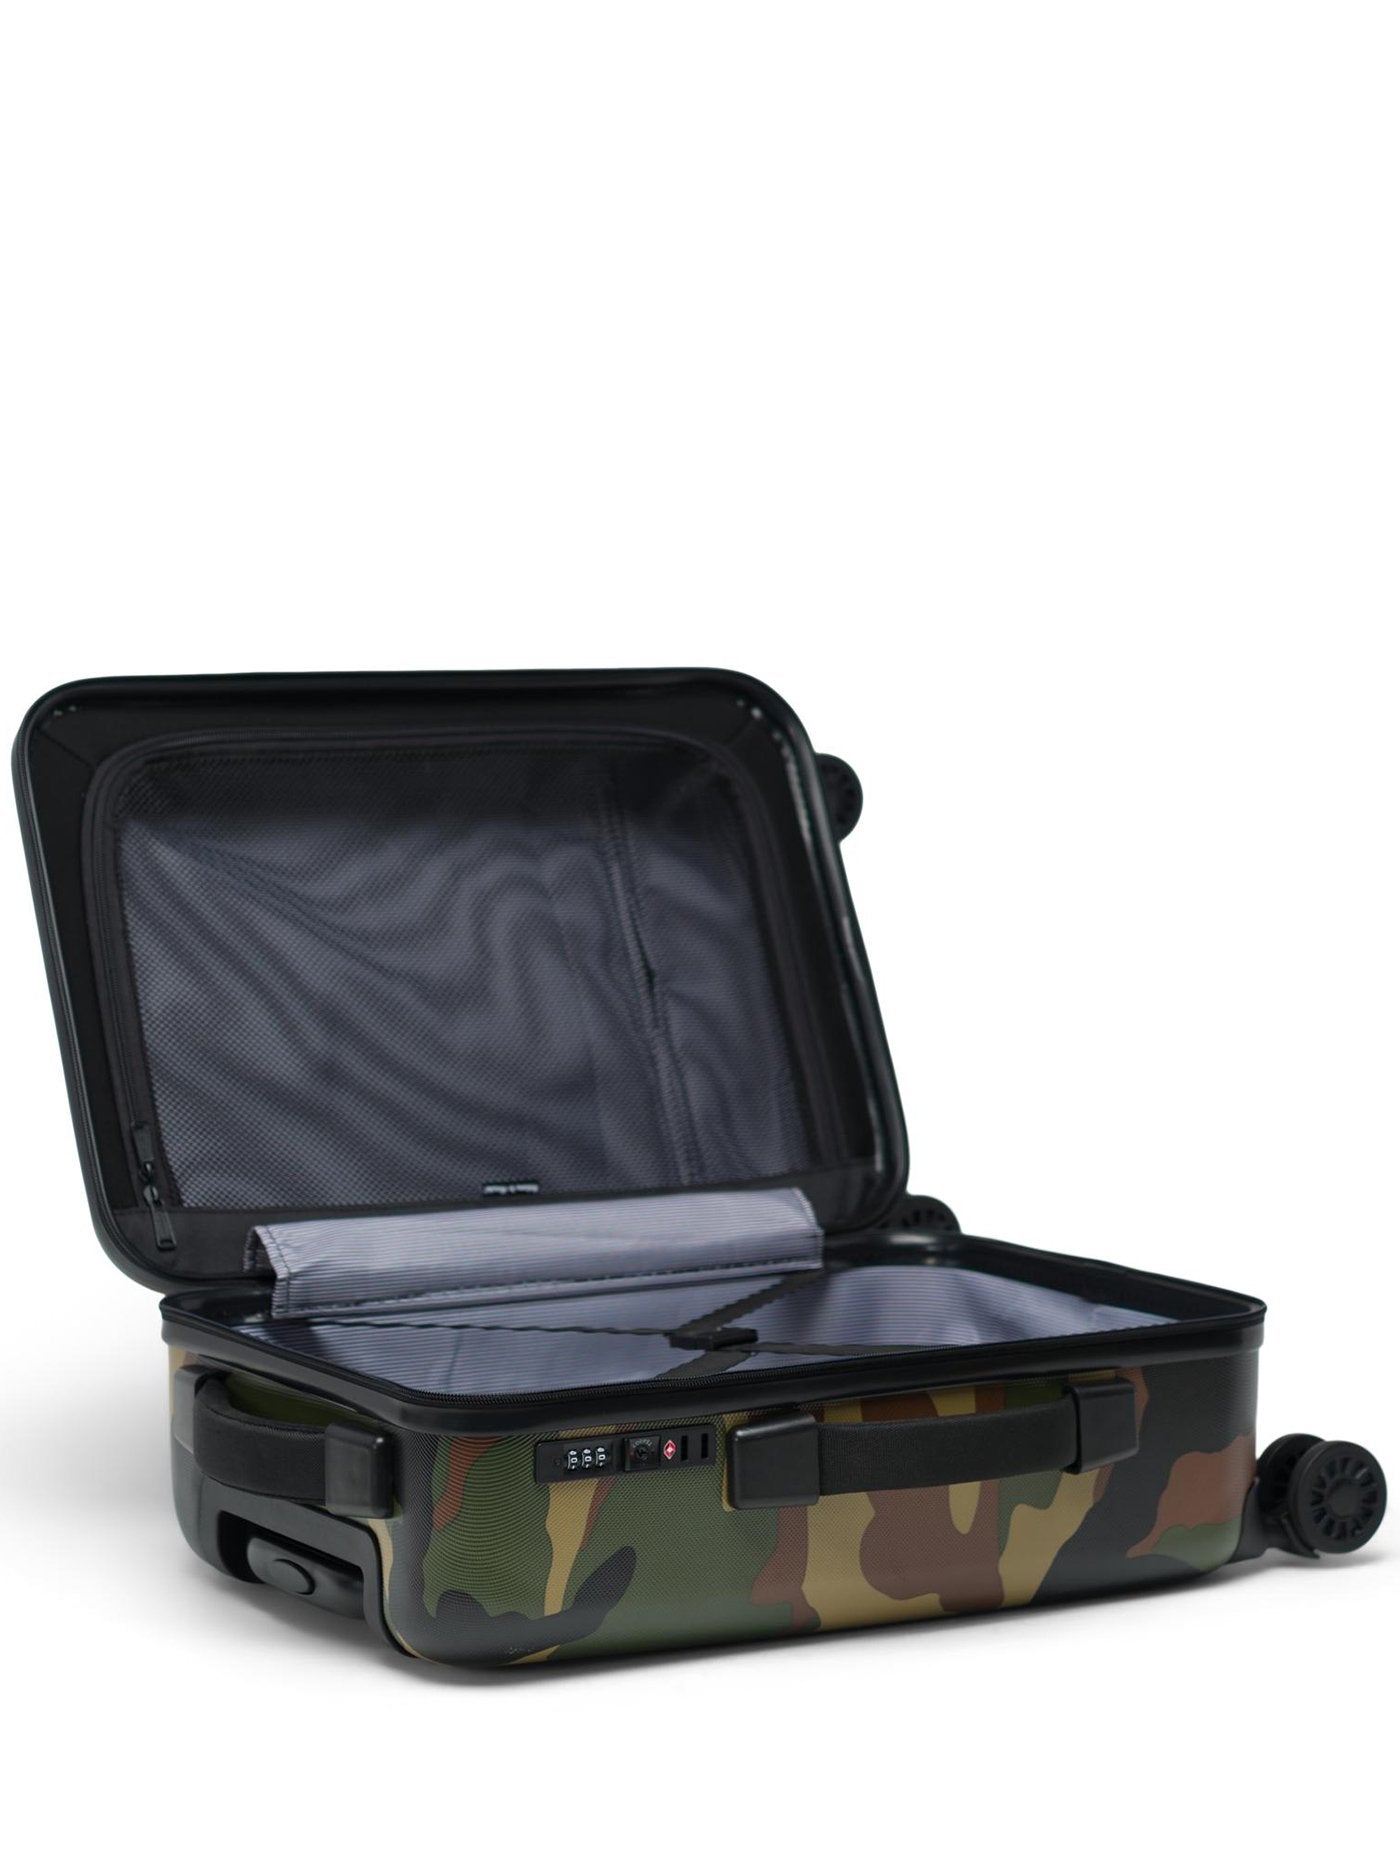 Herschel Trade Small 40L Suitcase